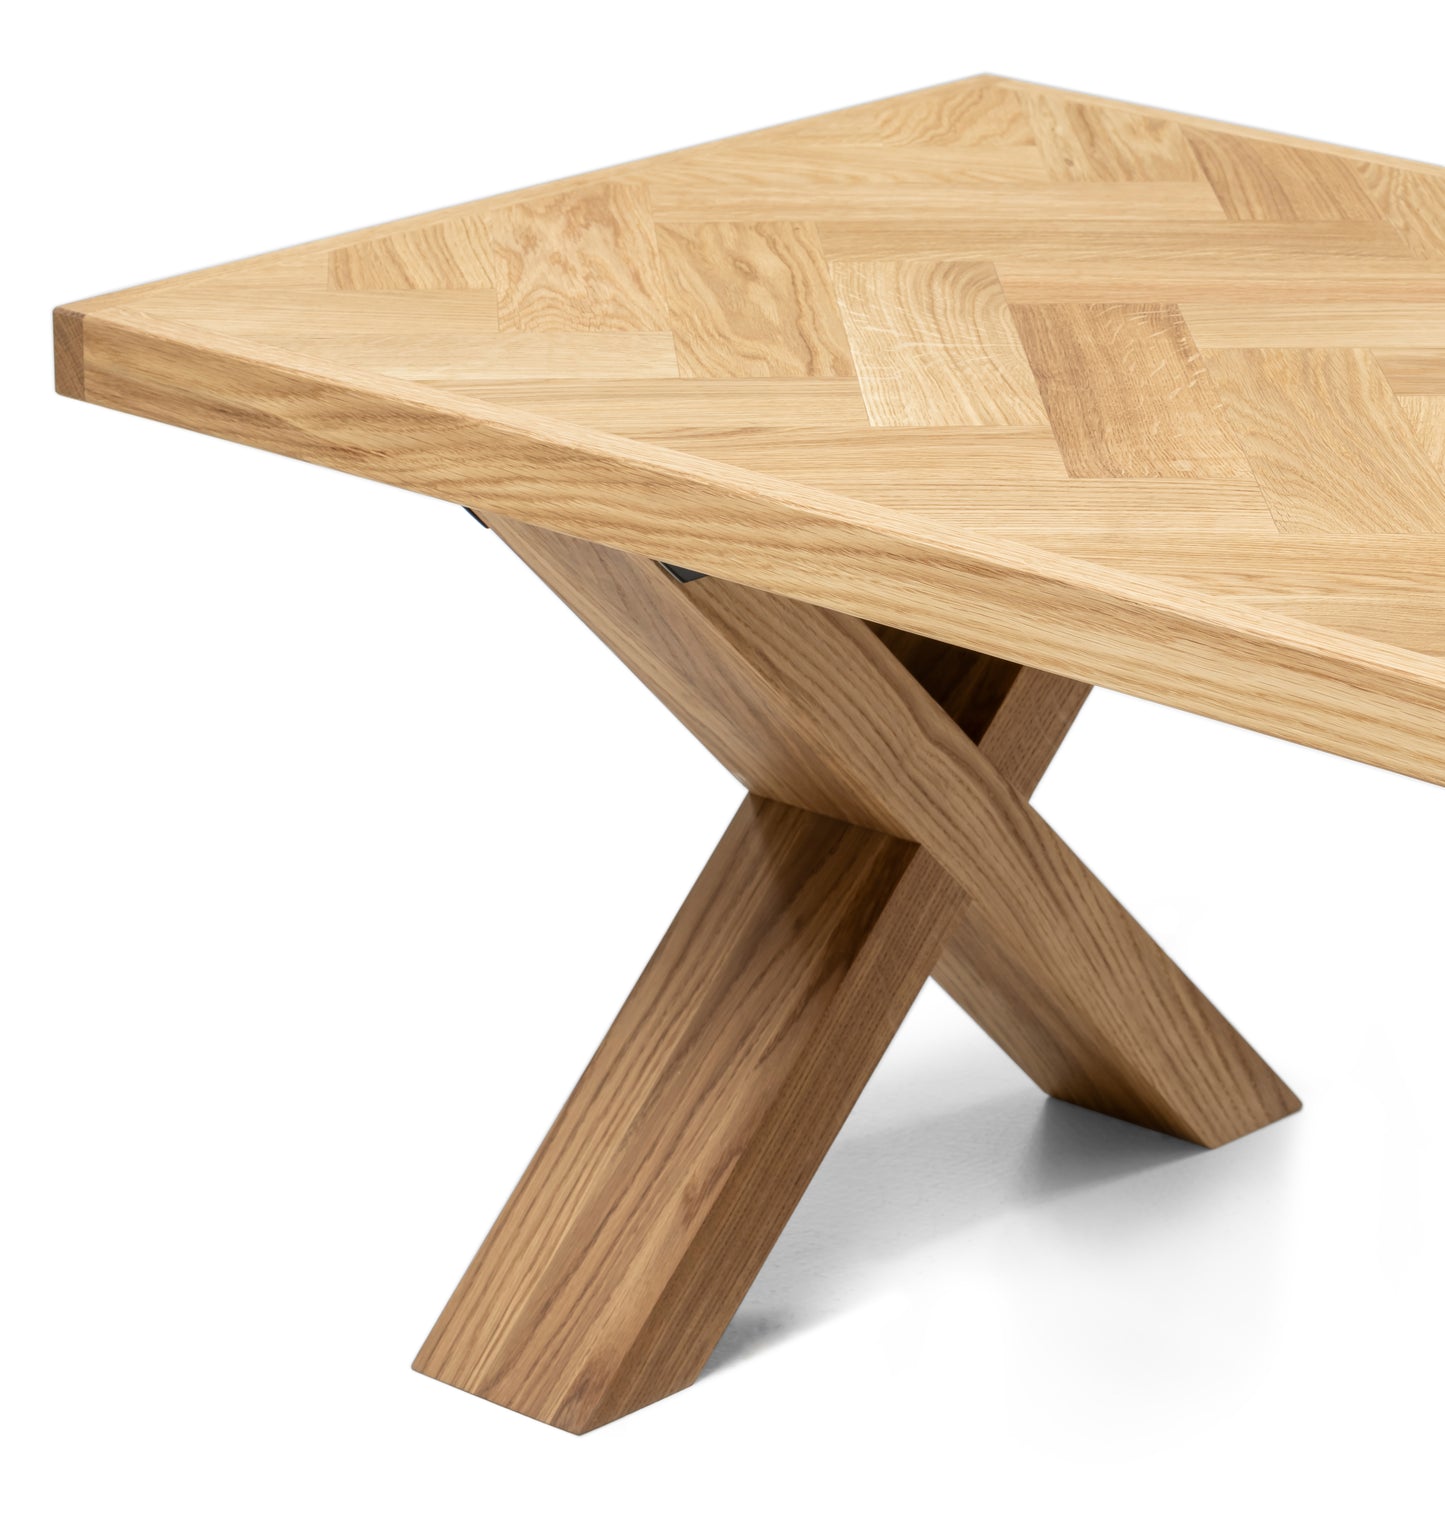 Parquete oak coffee table